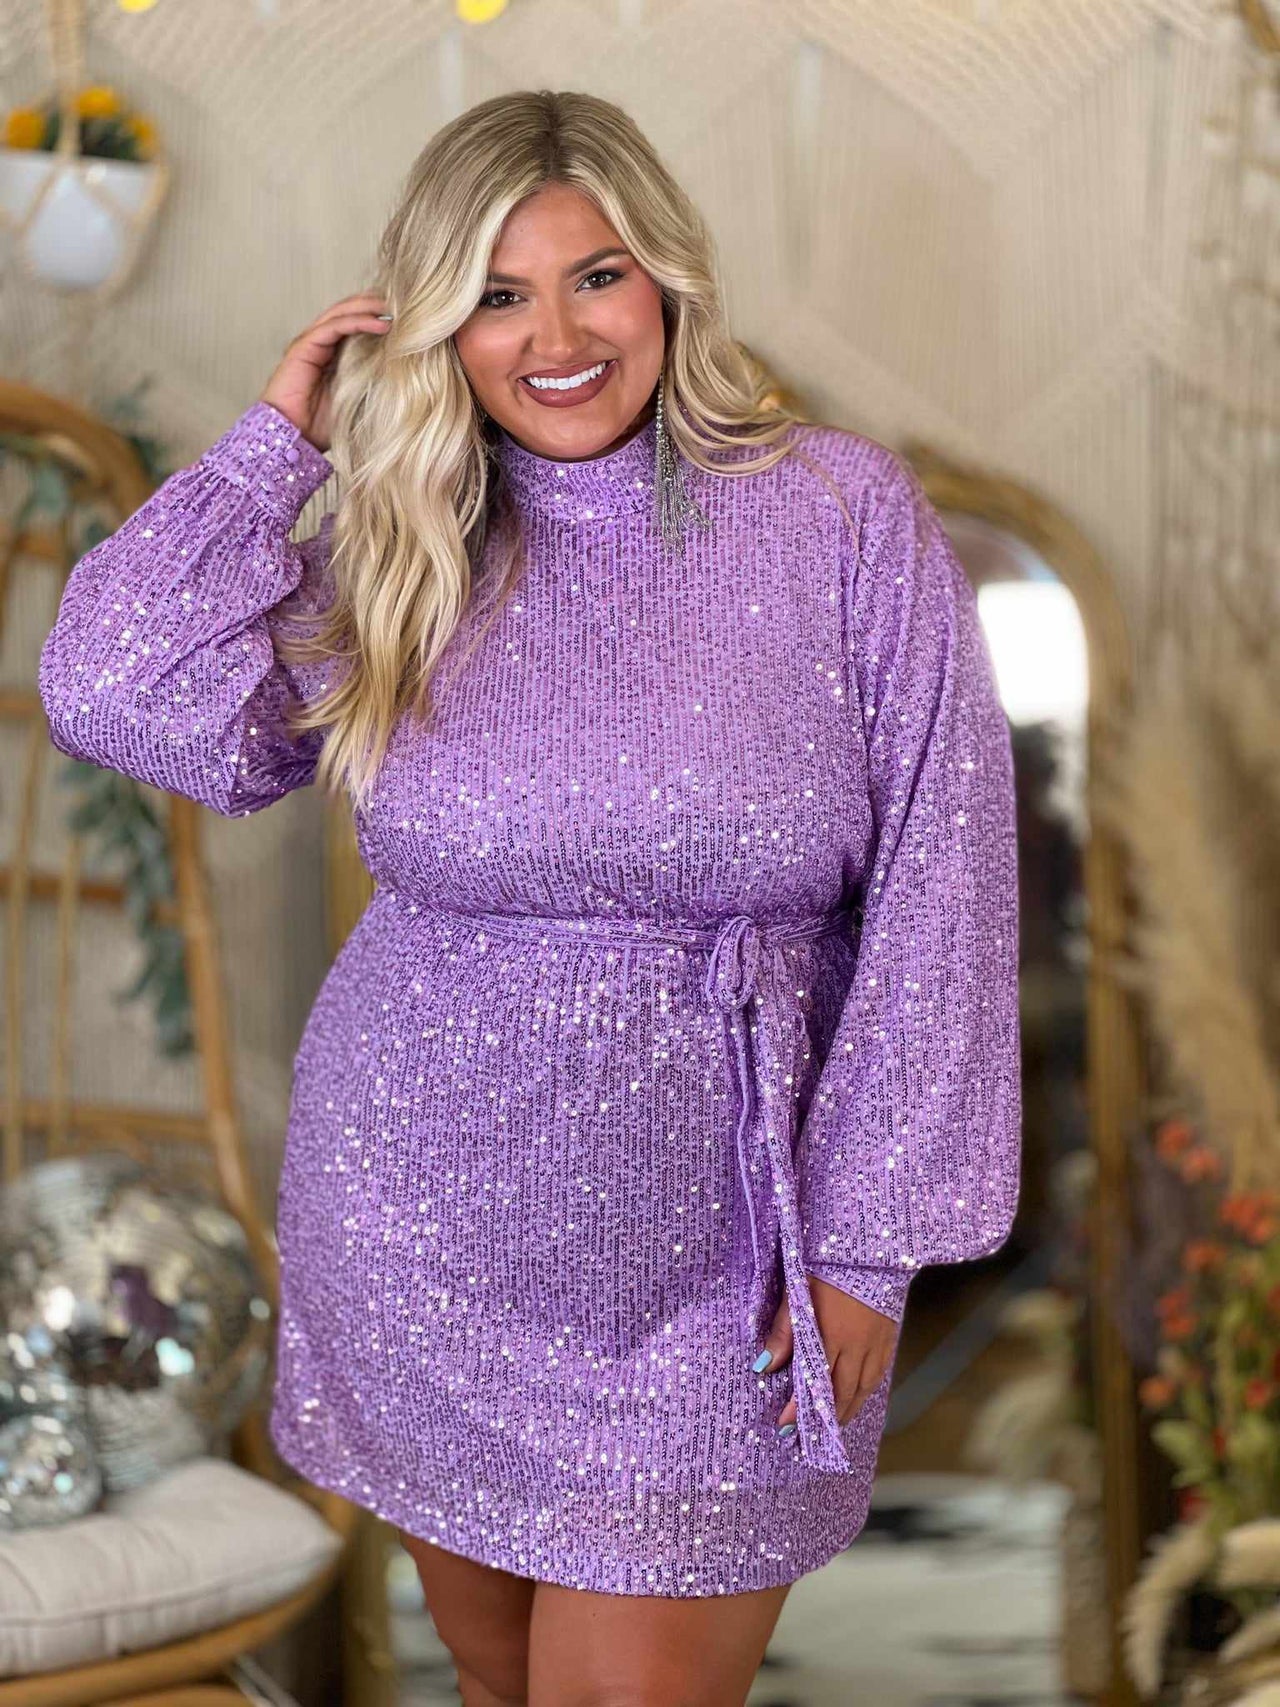 Modest short sequin dress in purple.